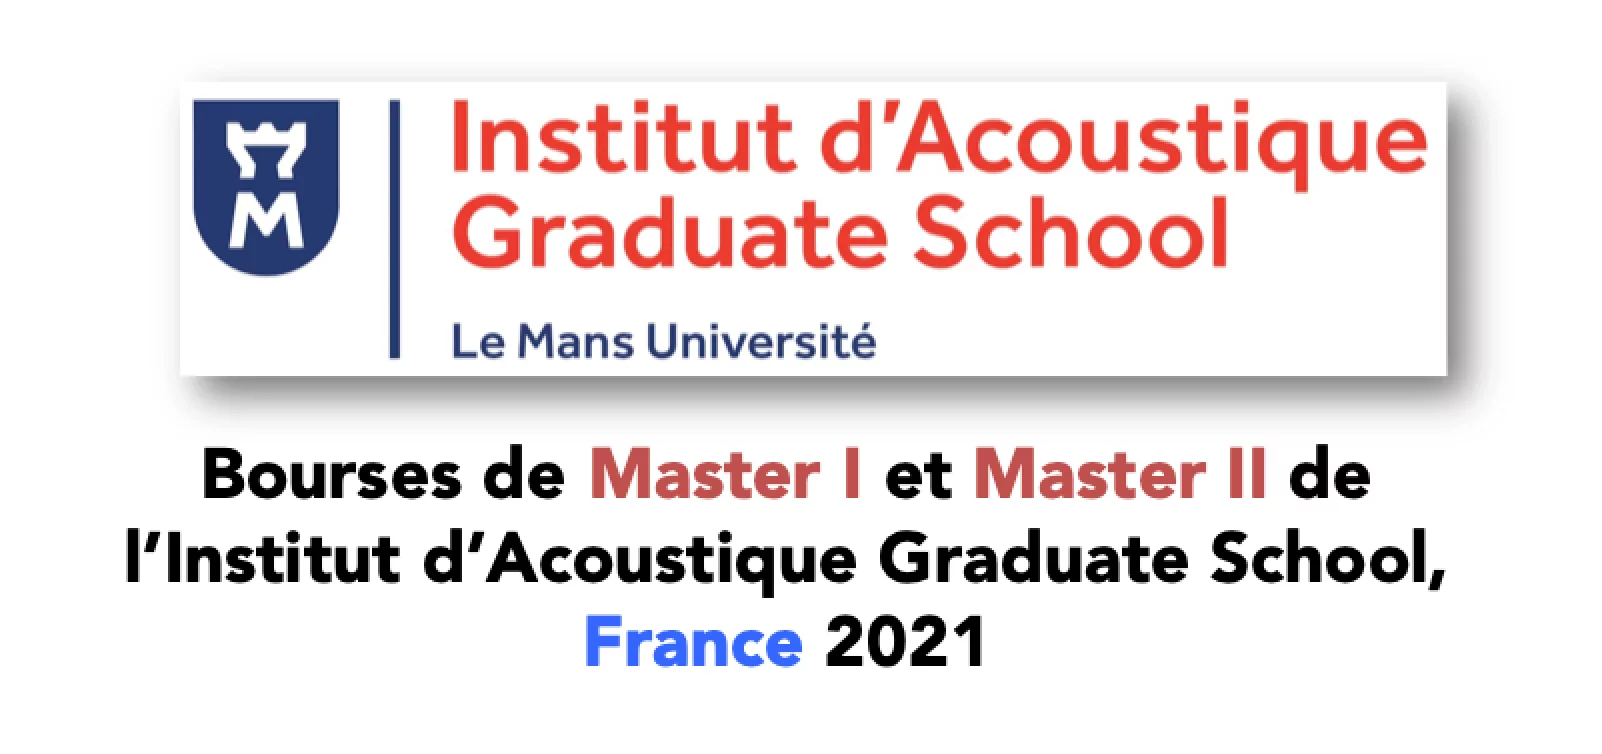 Bourses de Master I et Master II de l’Institut d’Acoustique Graduate School, France 2021